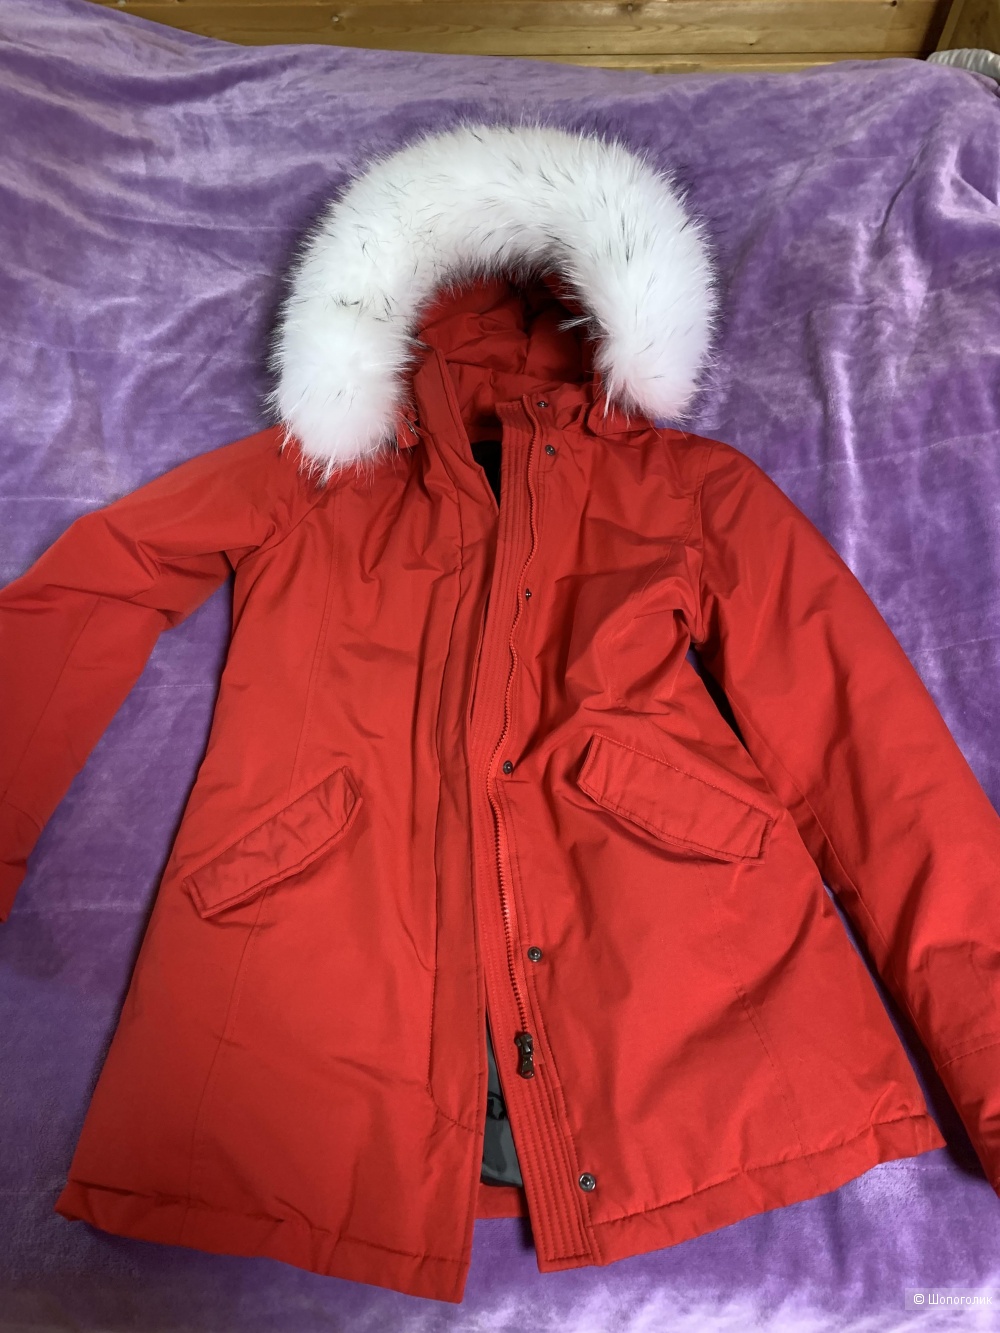 Зимняя куртка пуховик Canadian Сlassics размер 16 XS S